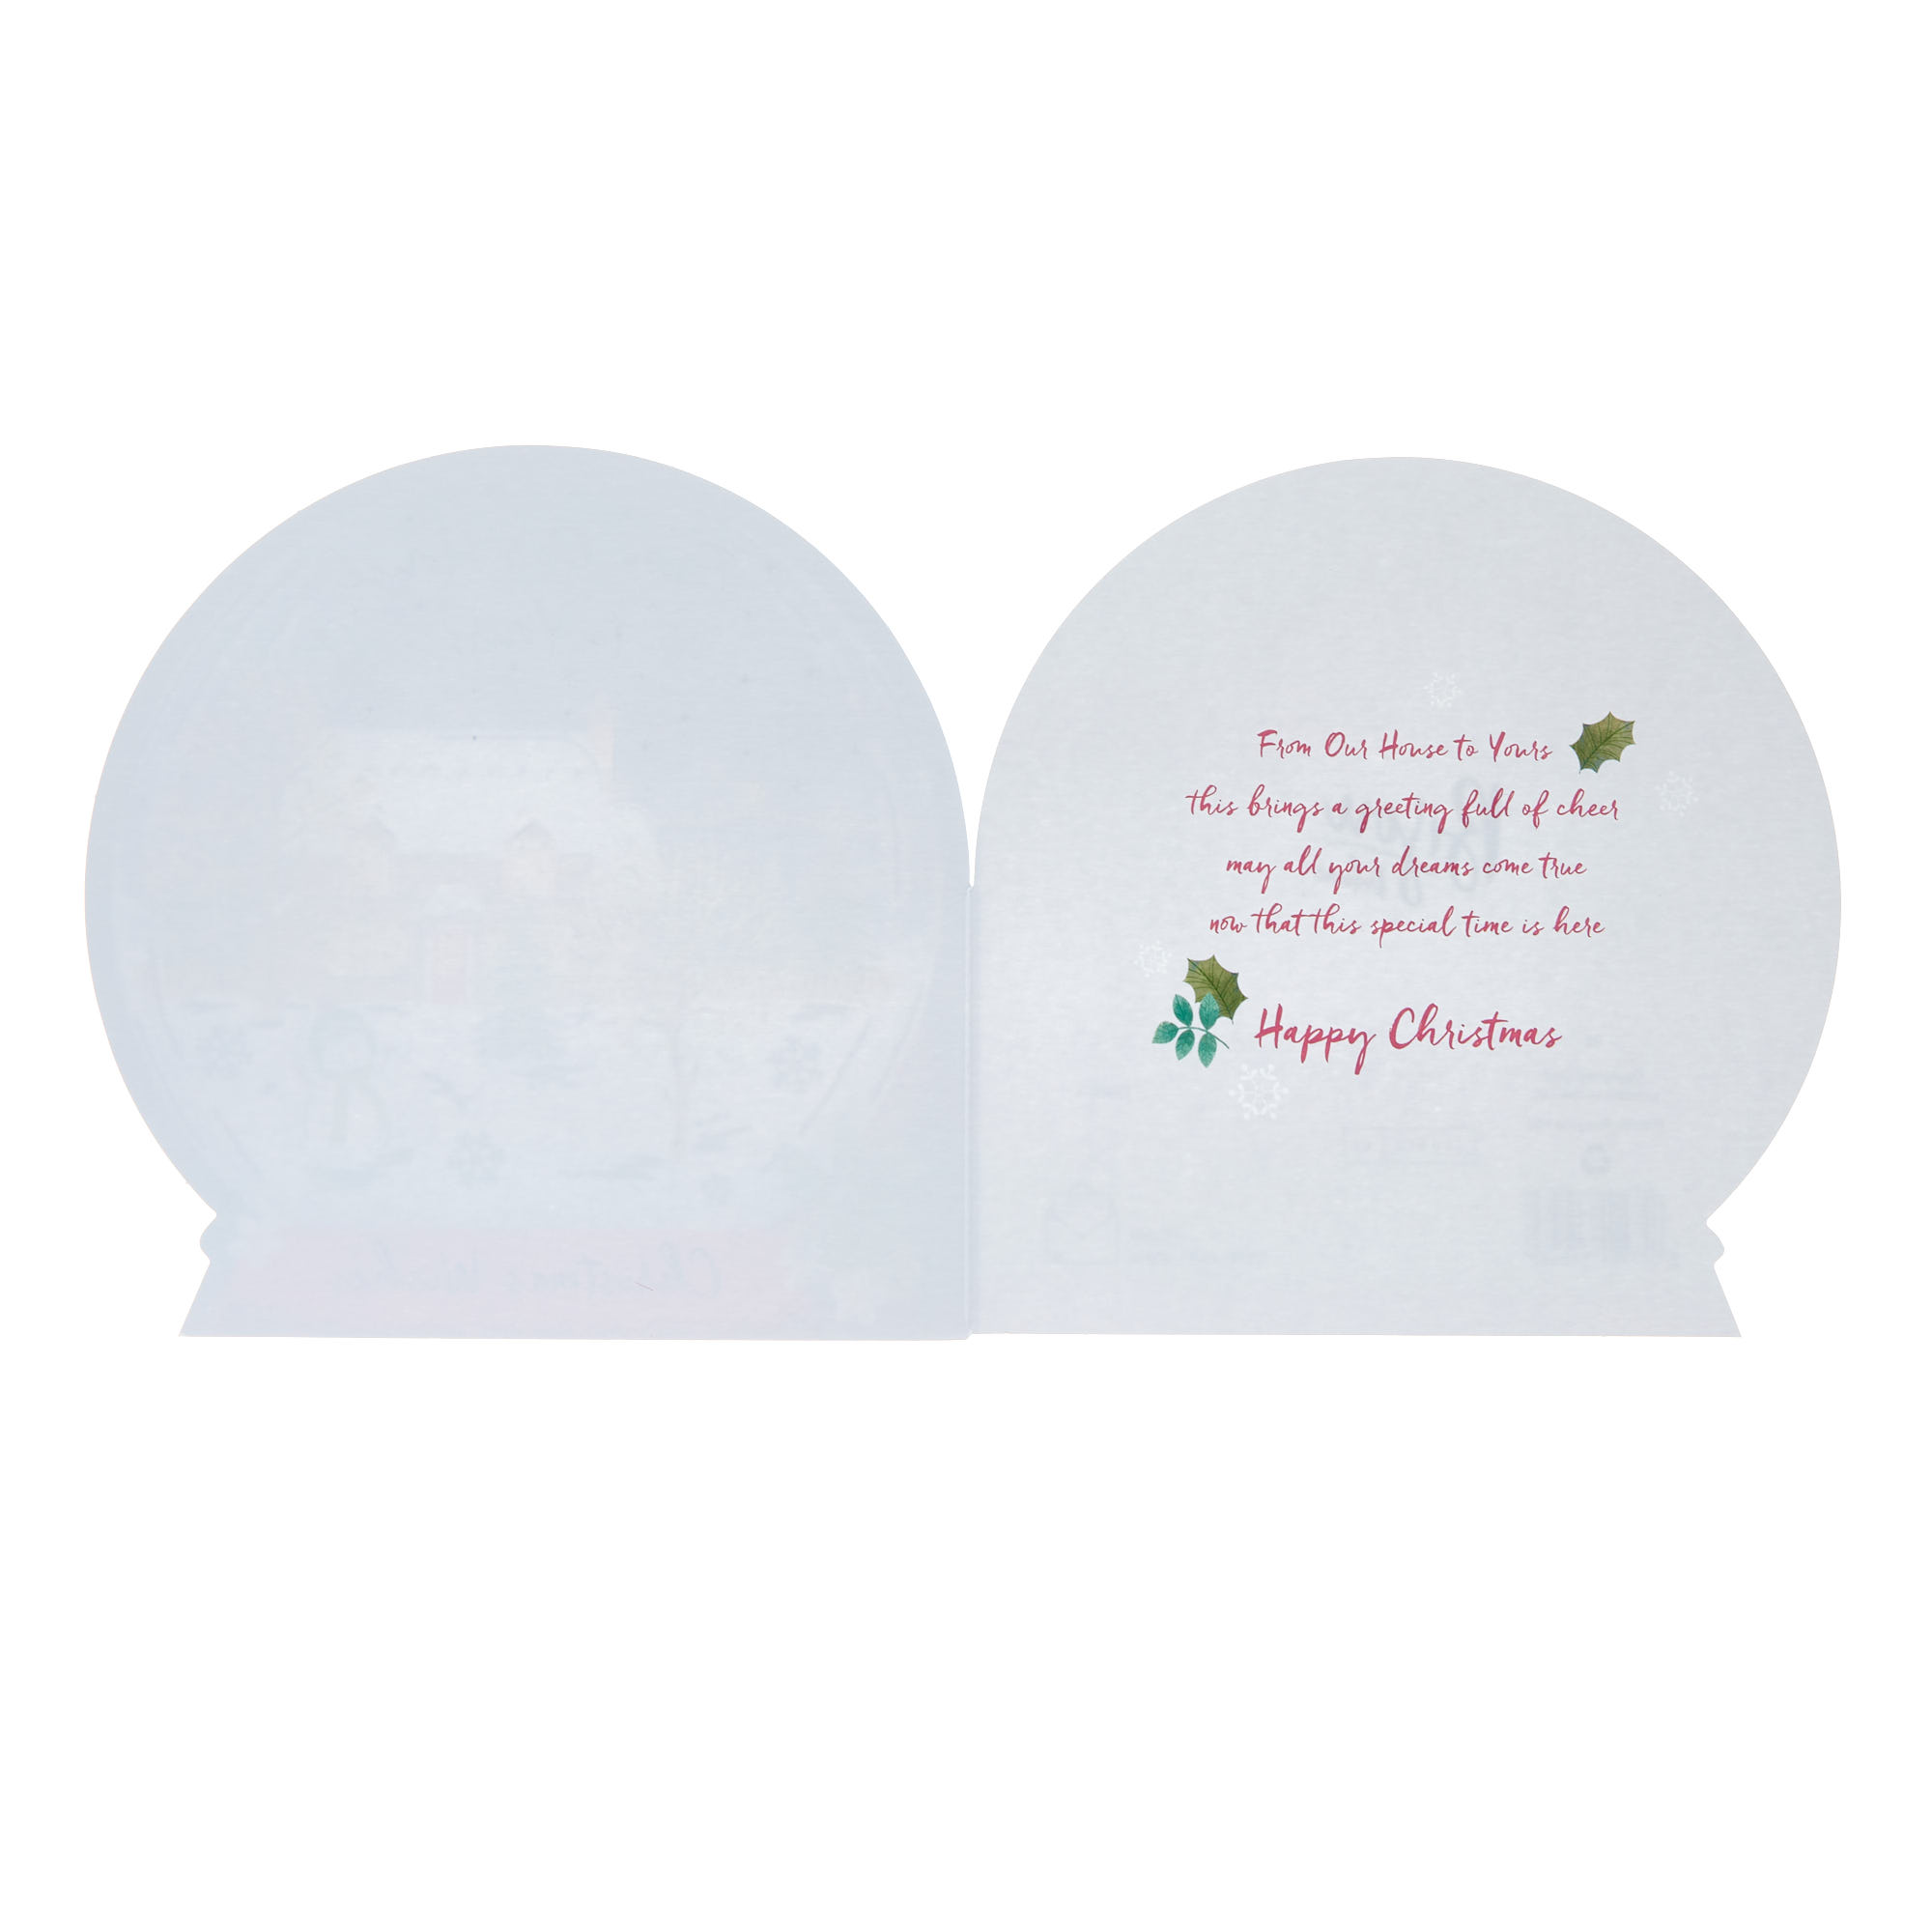 House to House Snowglobe Christmas Card